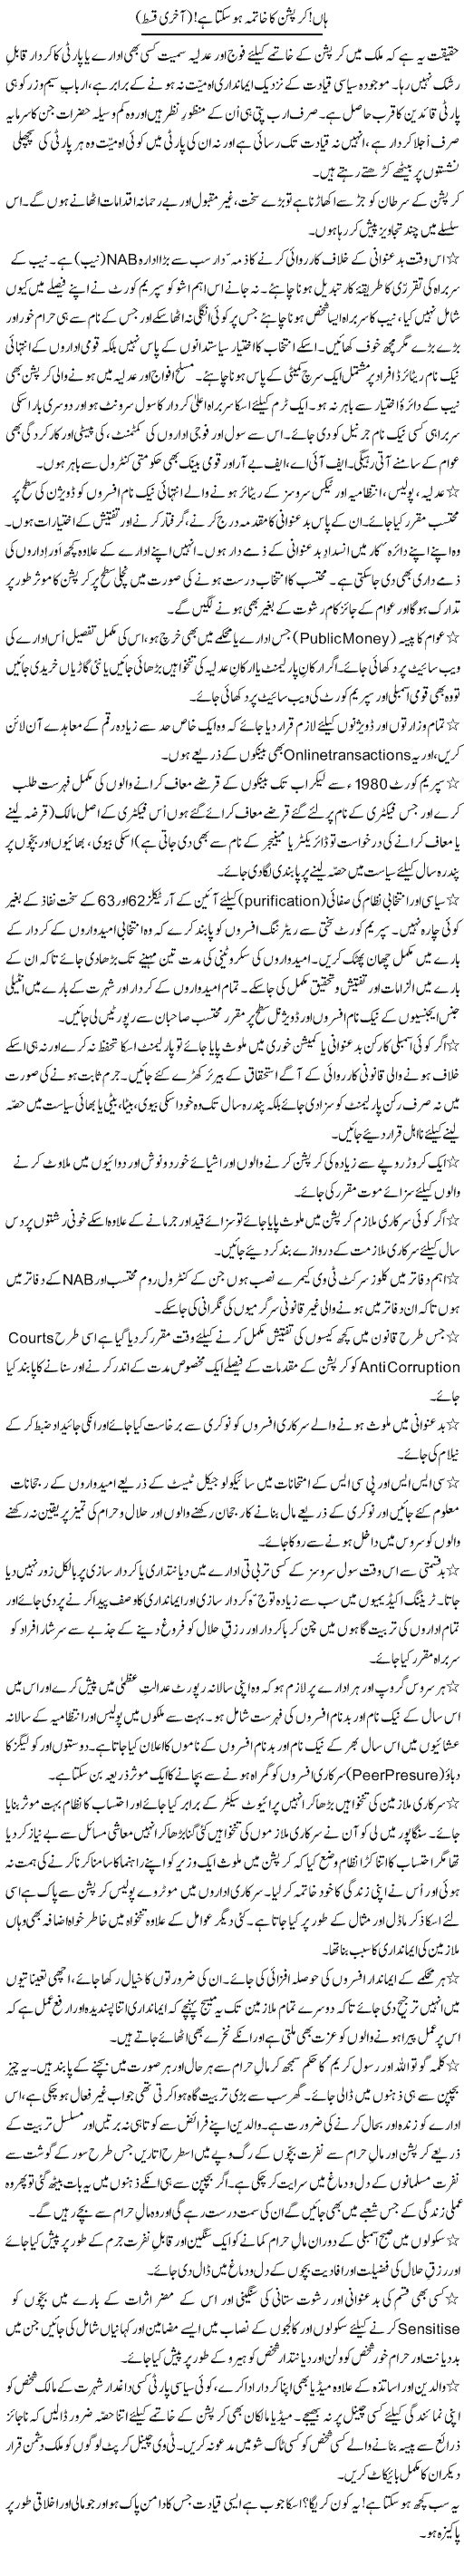 Haan! Corruption Ka Khatma Ho Sakta Hai! (3) | Zulfiqar Ahmed Cheema | Daily Urdu Columns